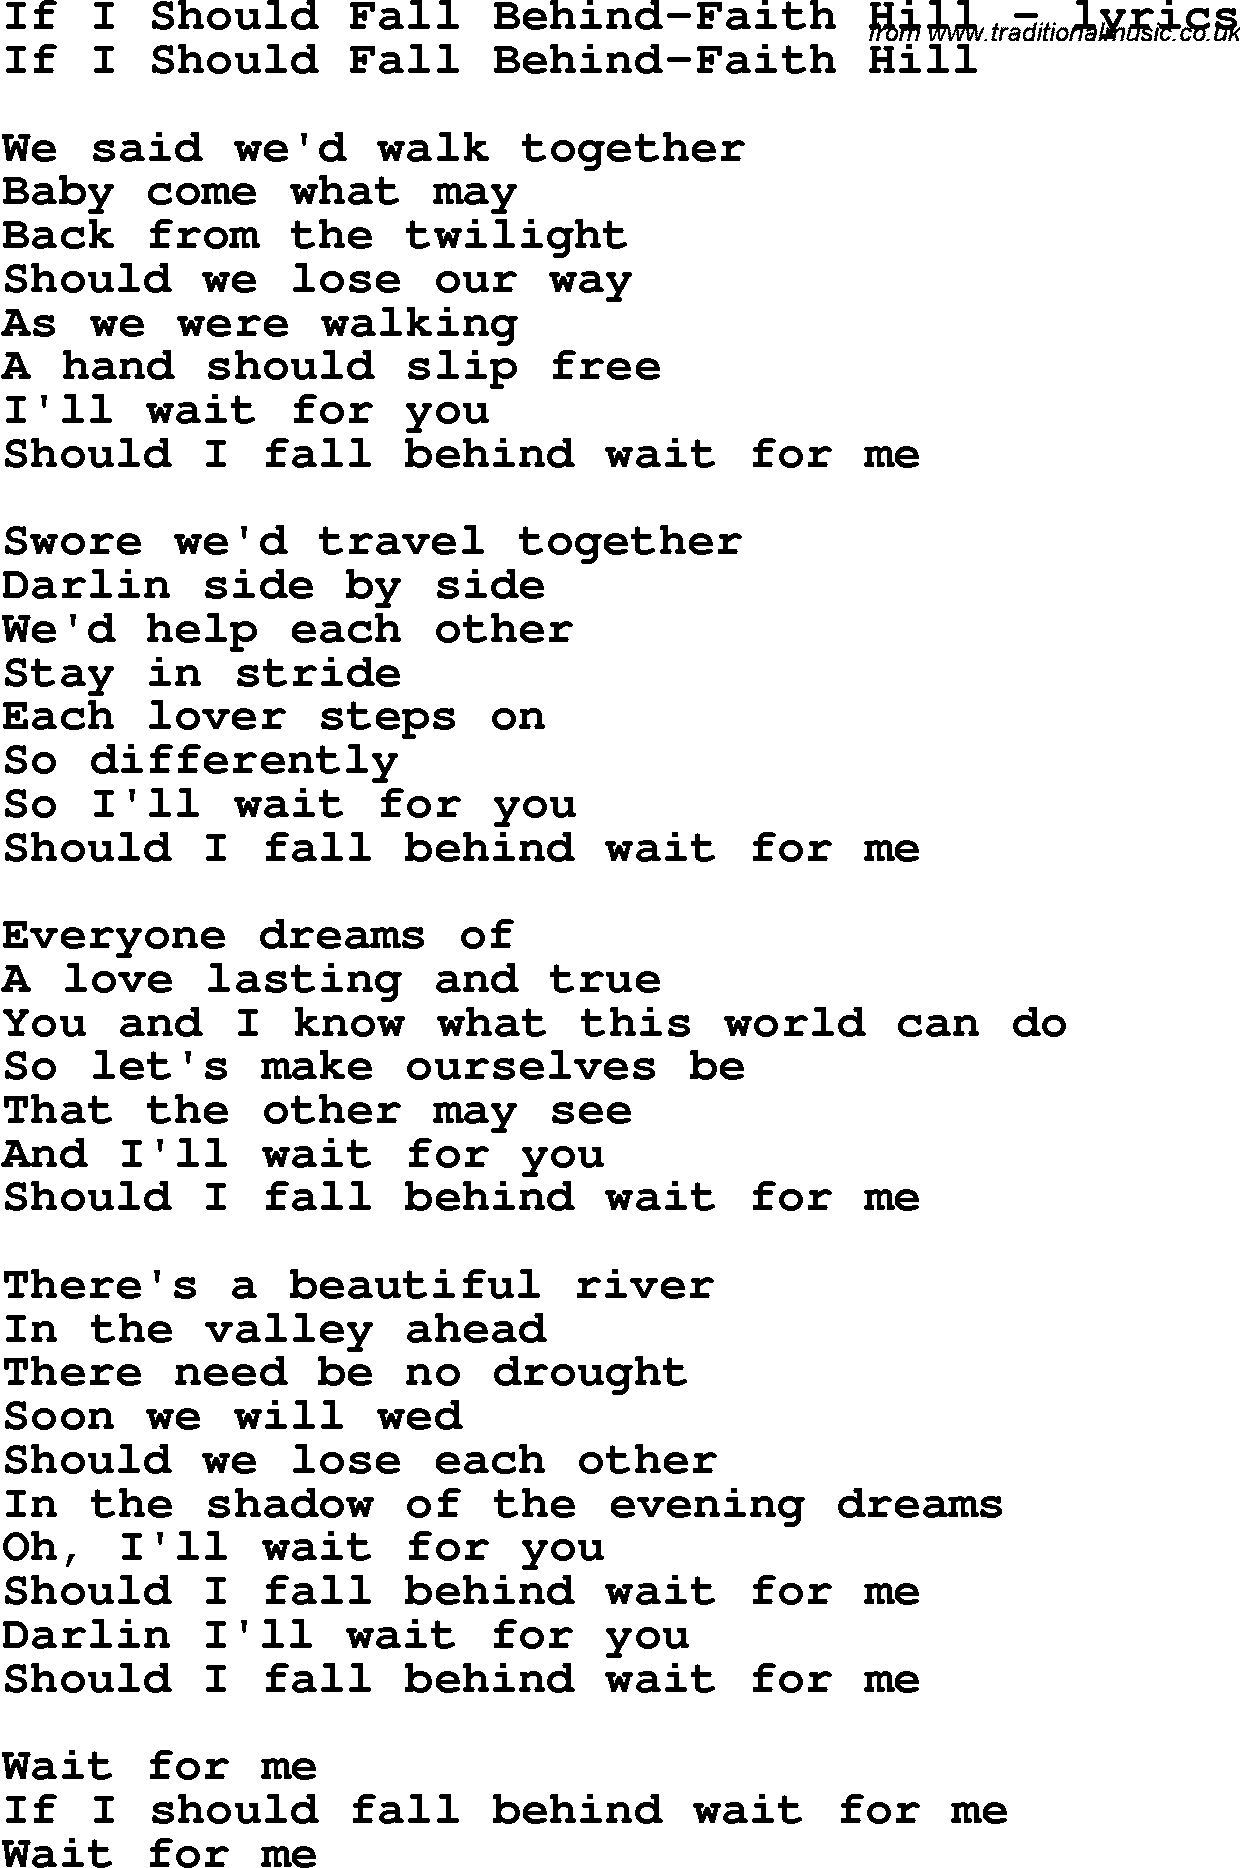 Love Song Lyrics for: If I Should Fall Behind-Faith Hill